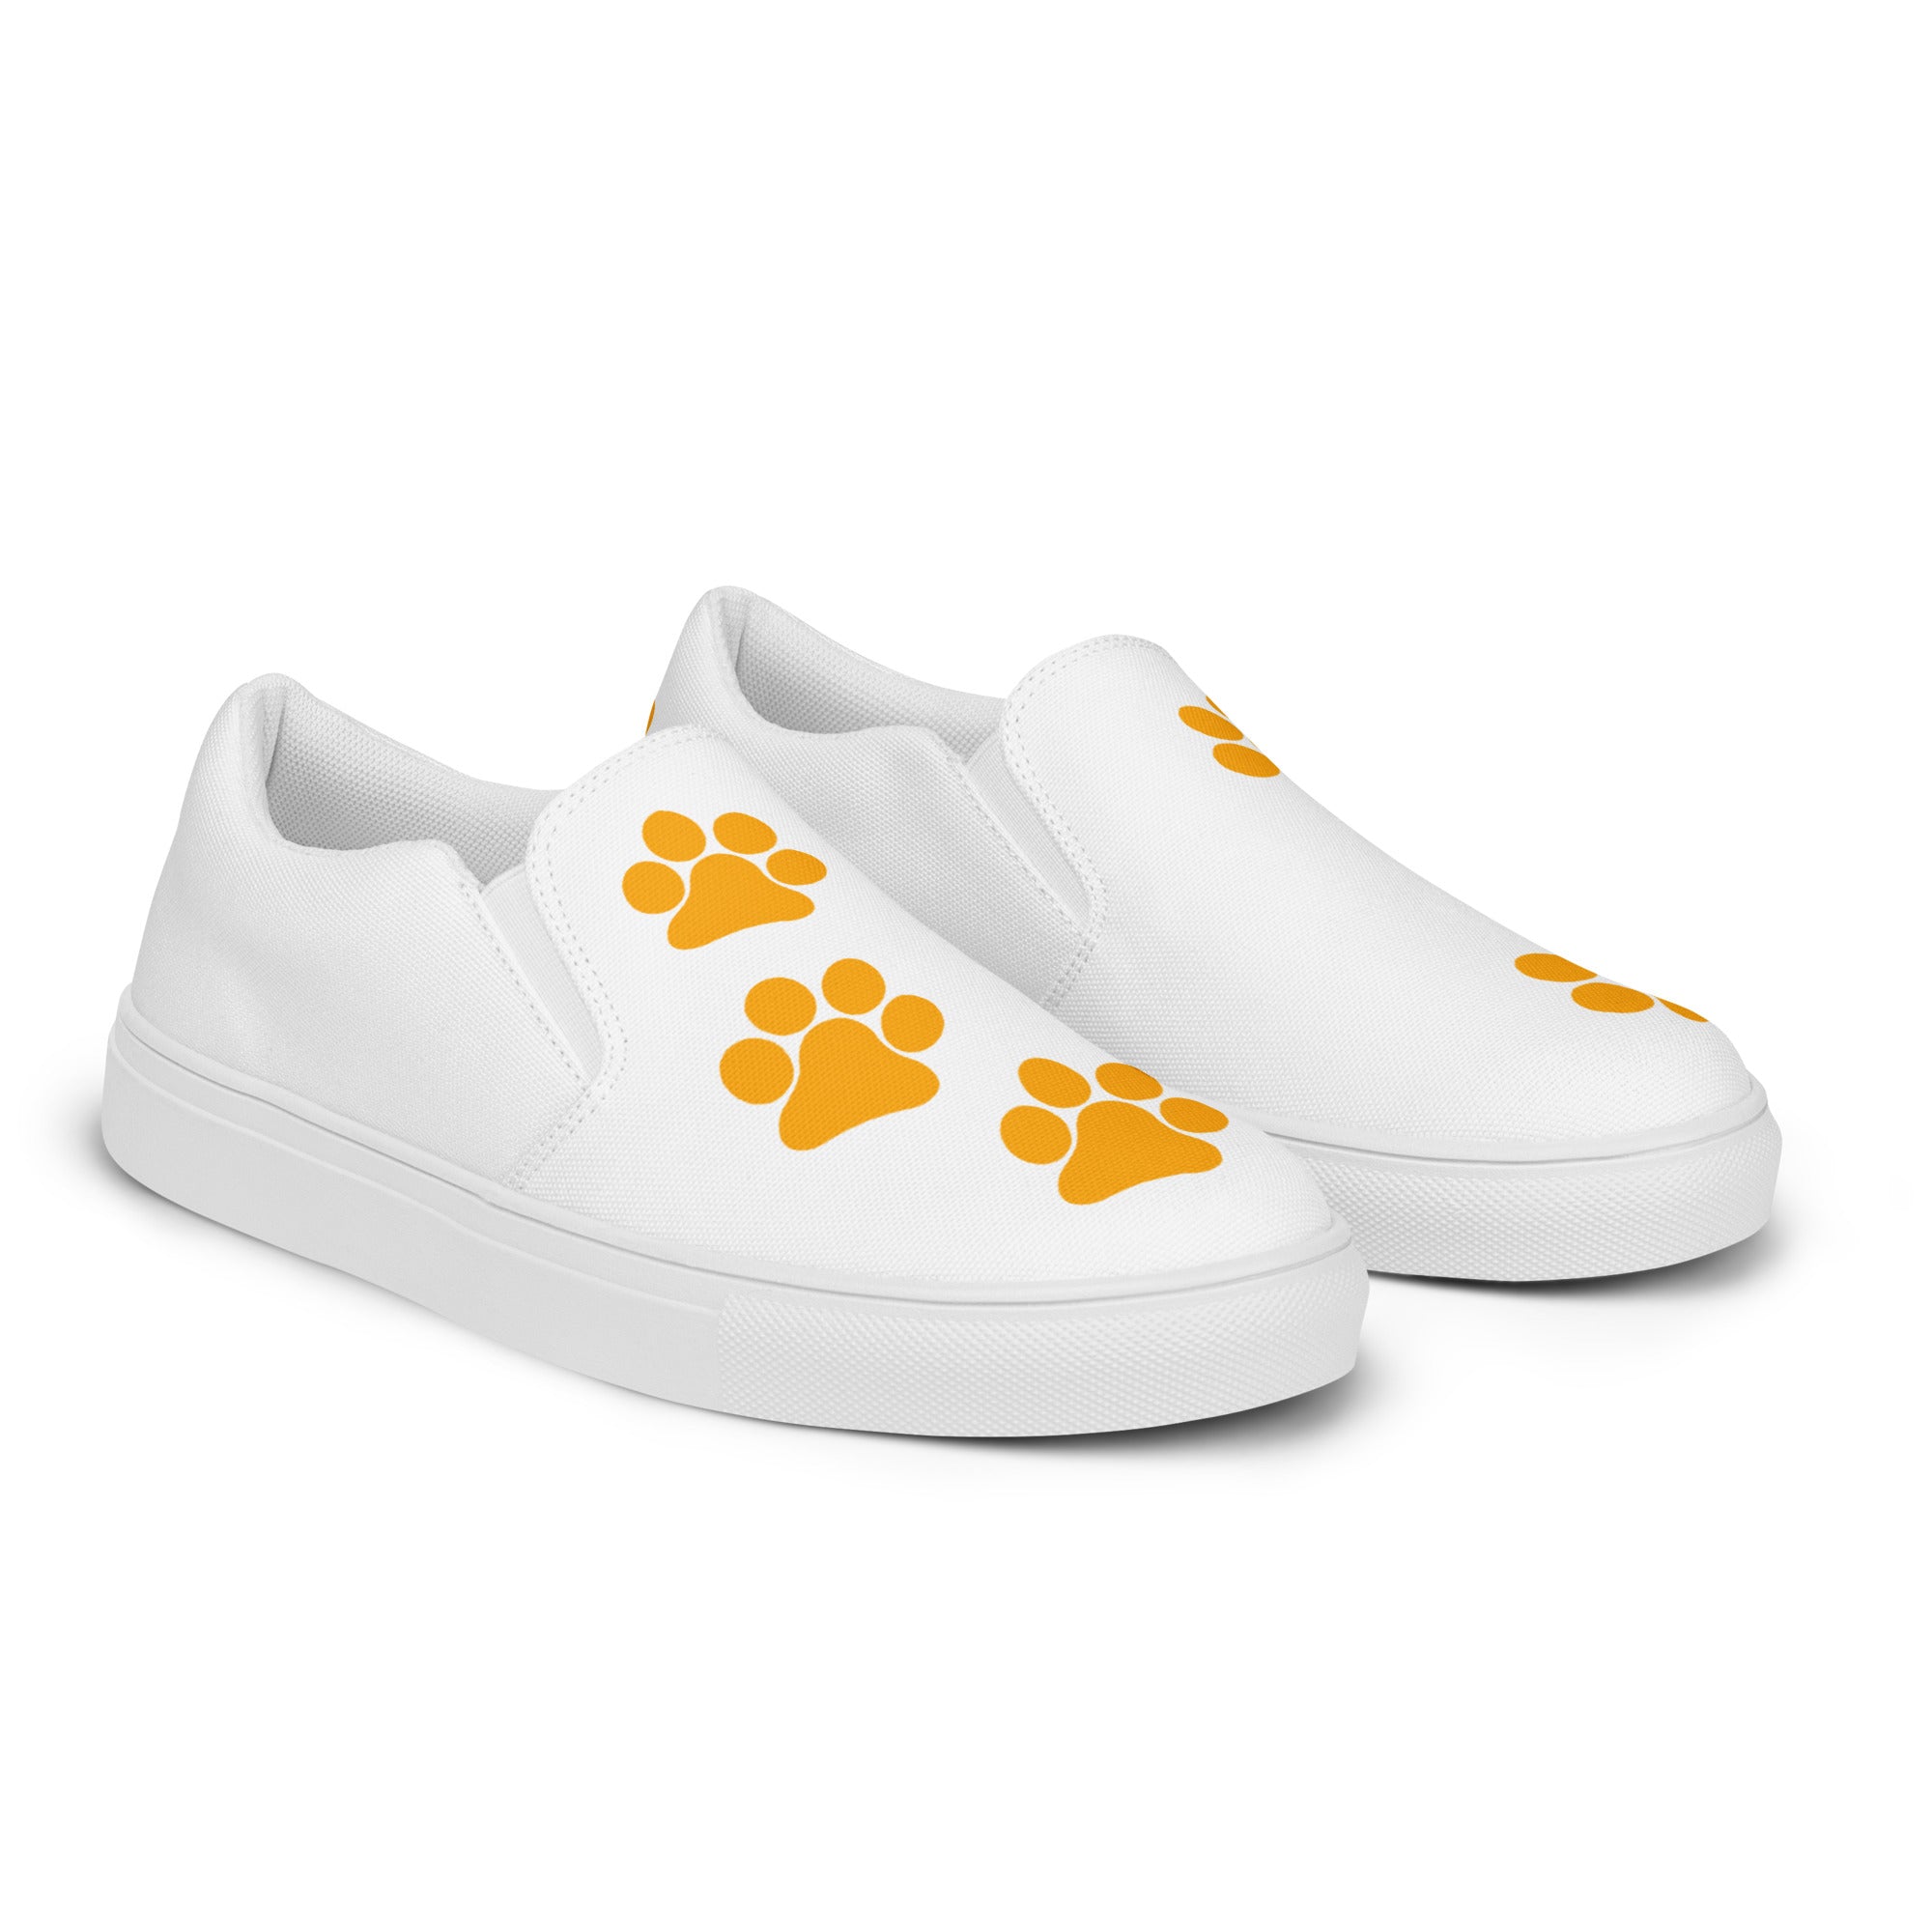 Men’s slip-on Orange Paw shoes